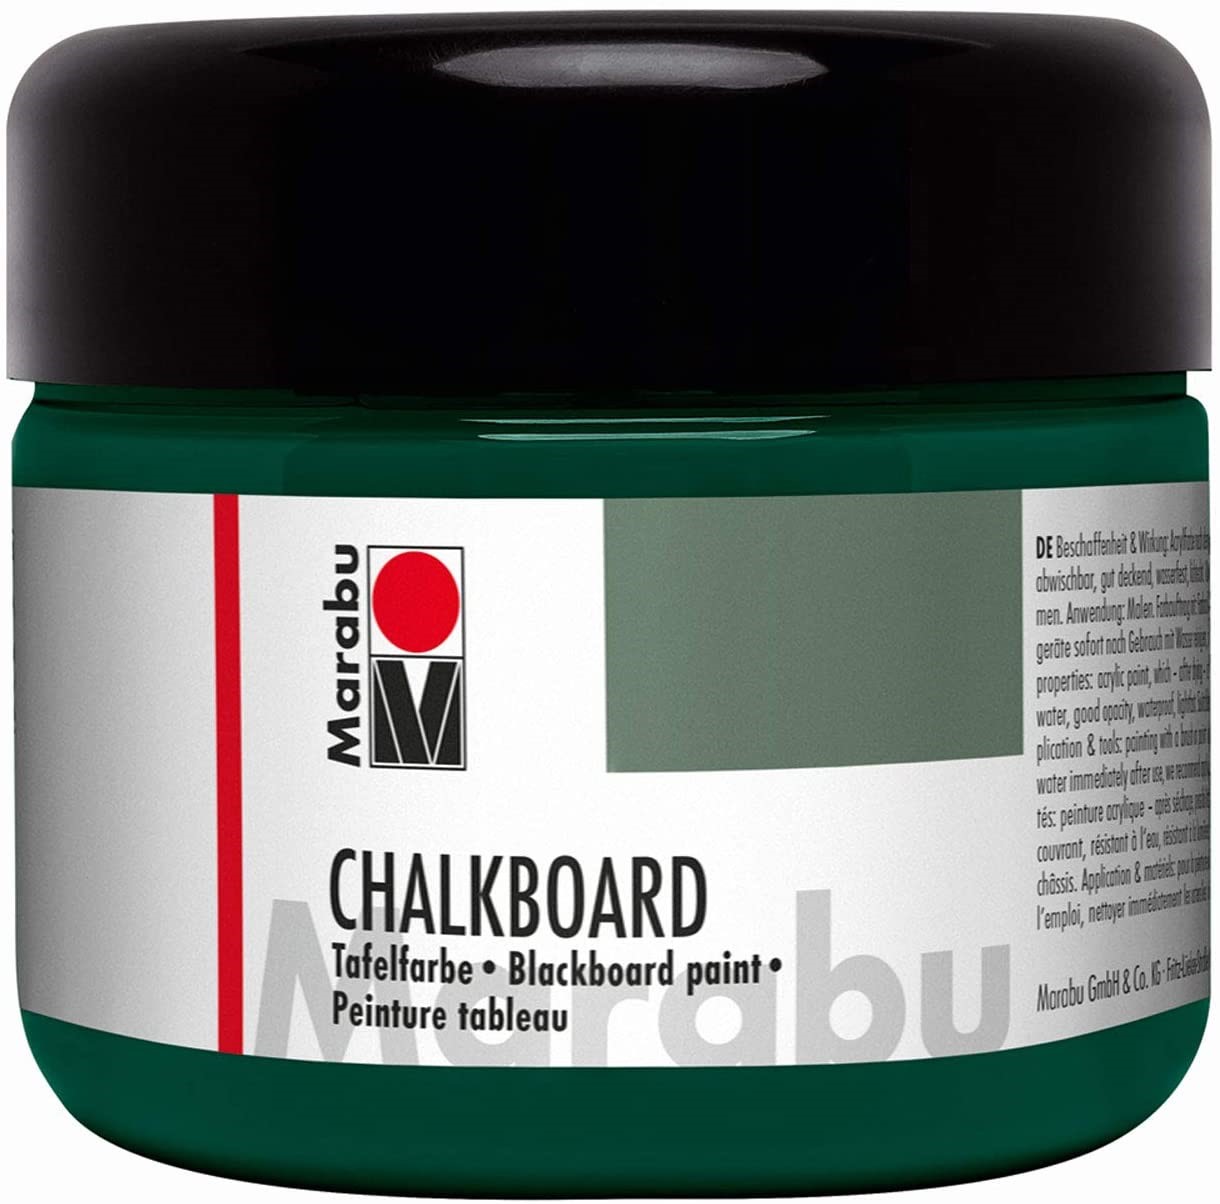 Marabu CHALKBOARD Tafelfarbe, Tafel Grün 868, 225 ml